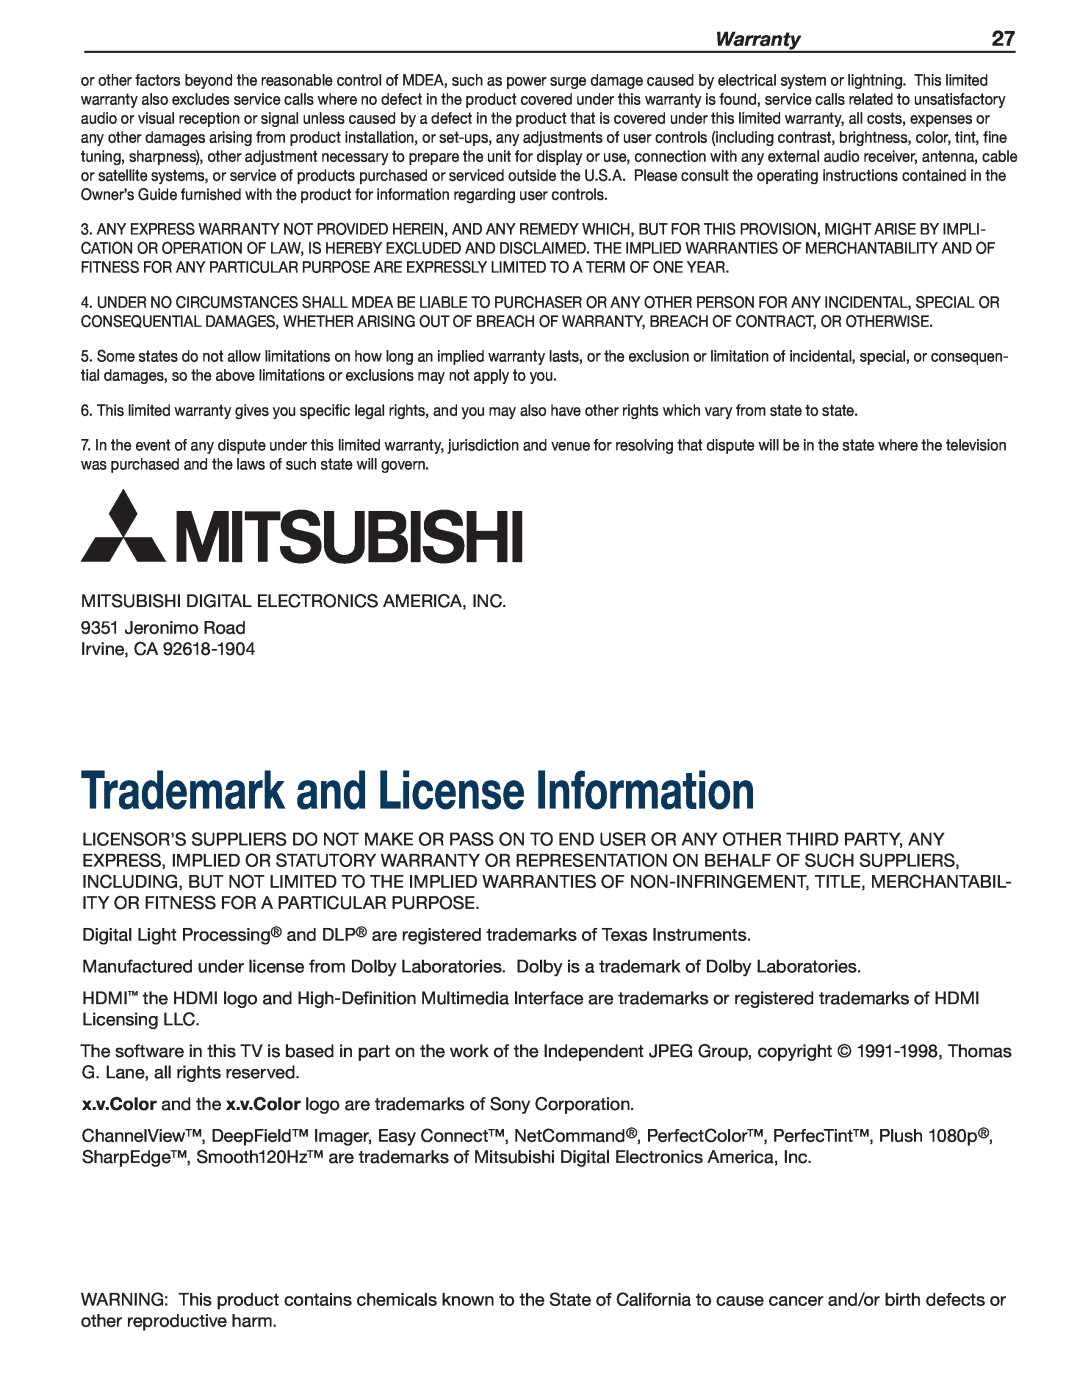 Mitsubishi Electronics WD-73837 manual Trademark and License Information, Warranty27 